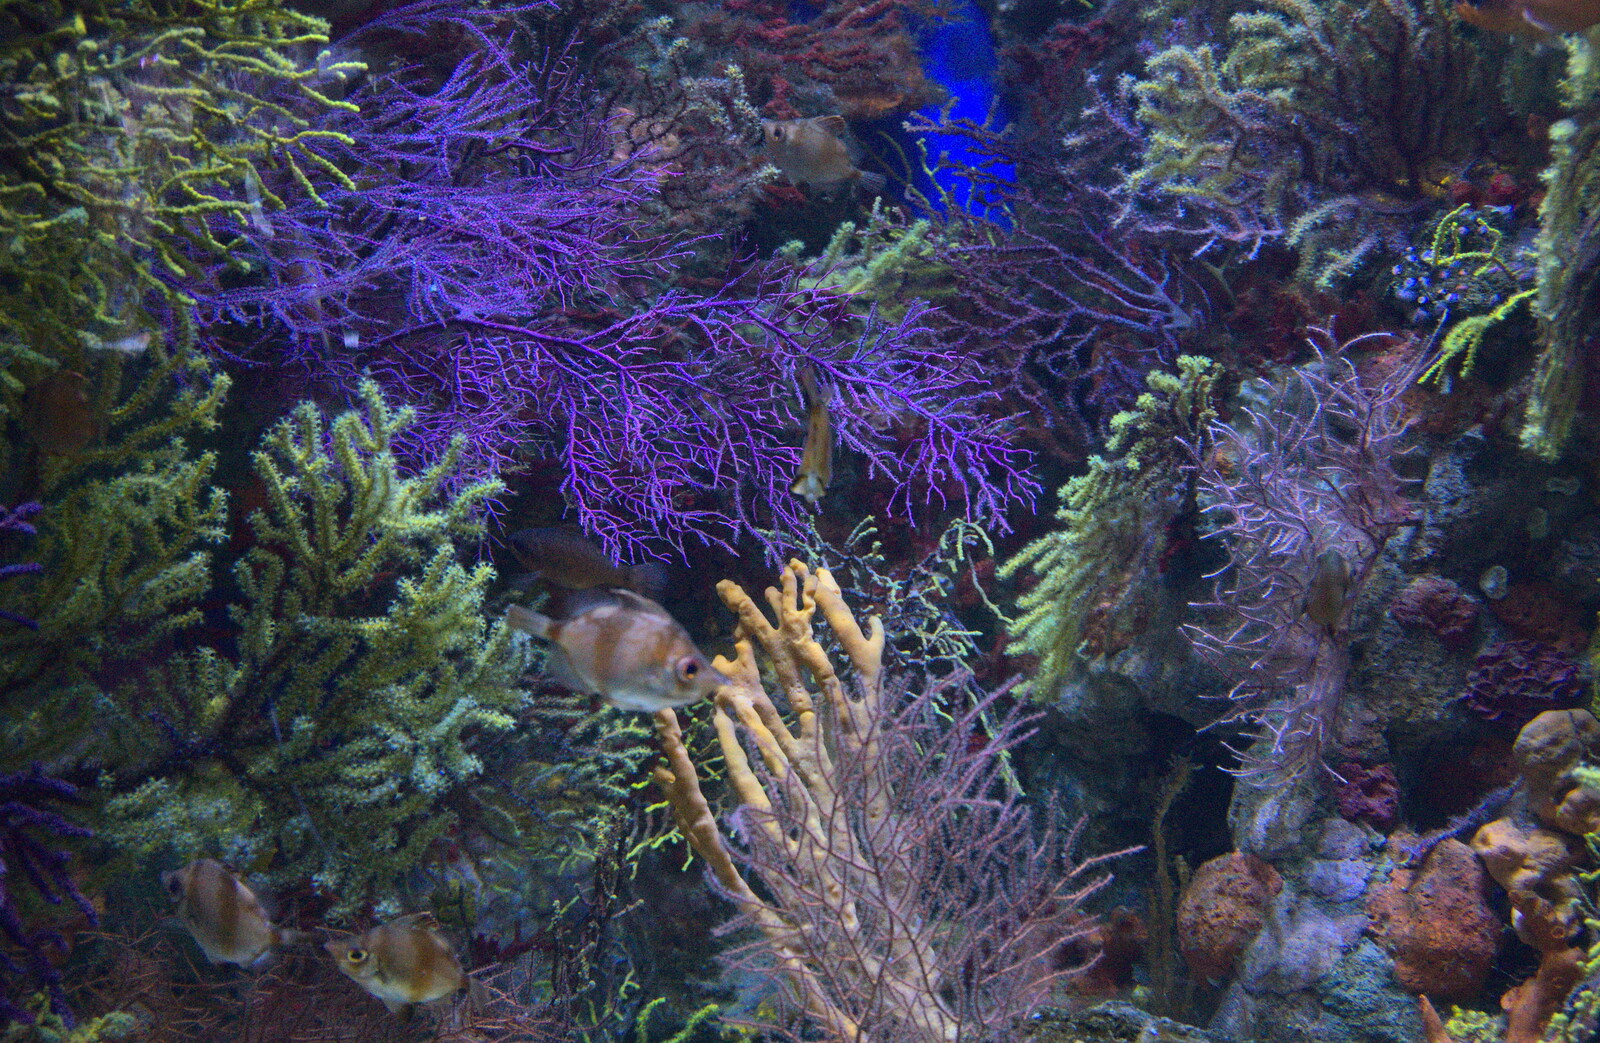 Multi-coloured corals from L'Aquarium de Barcelona, Port Vell, Catalonia, Spain - 23rd October 2017